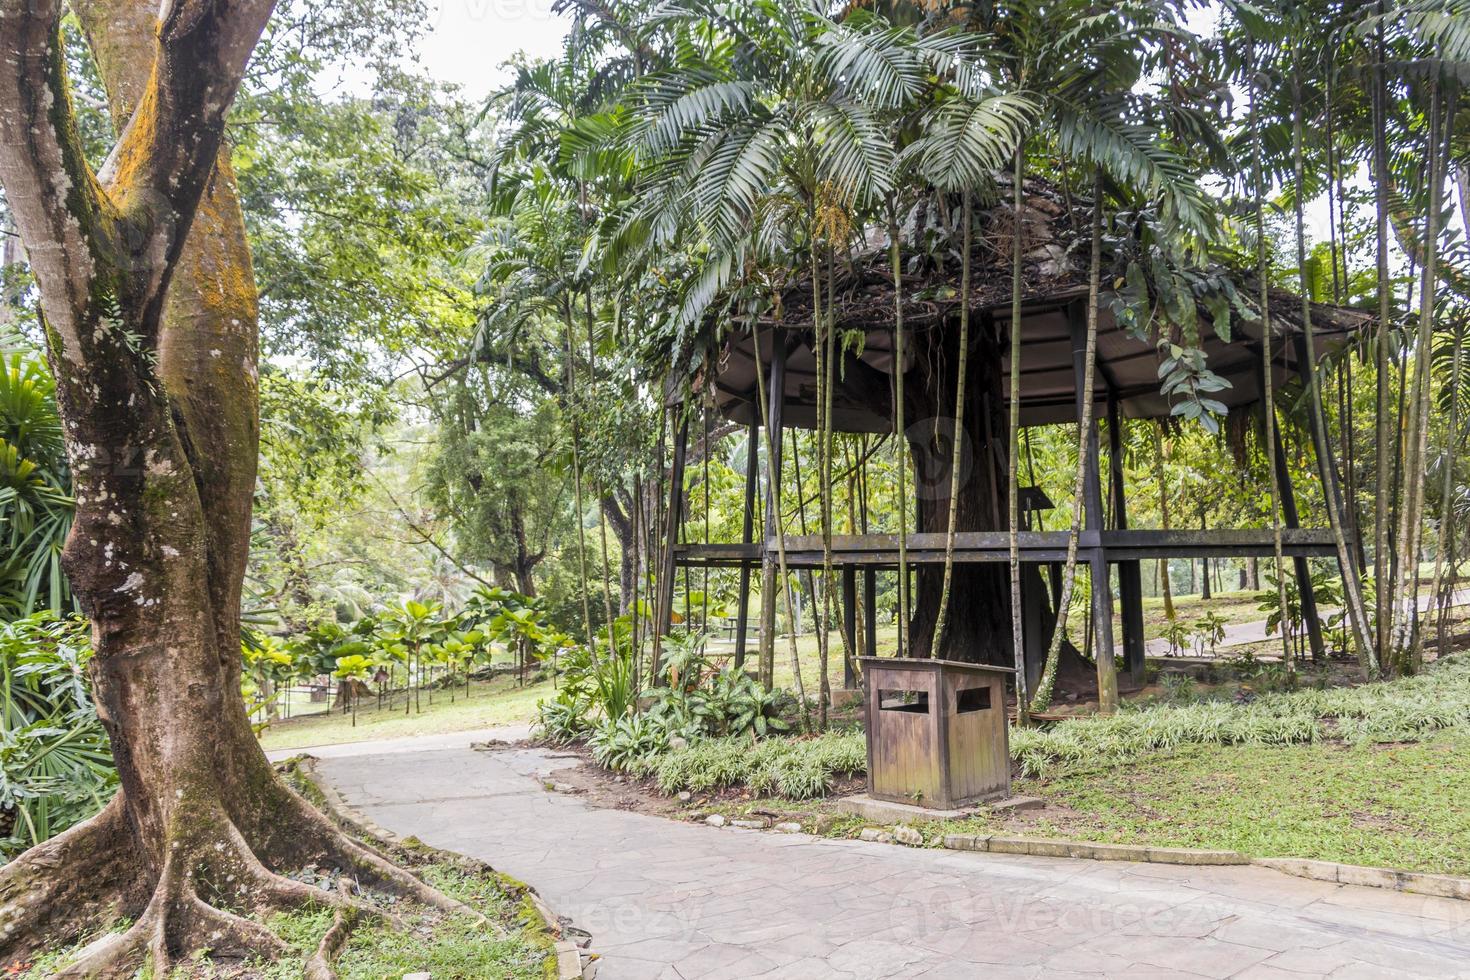 jardim de oásis nos jardins botânicos de perdana em kuala lumpur, malásia. foto